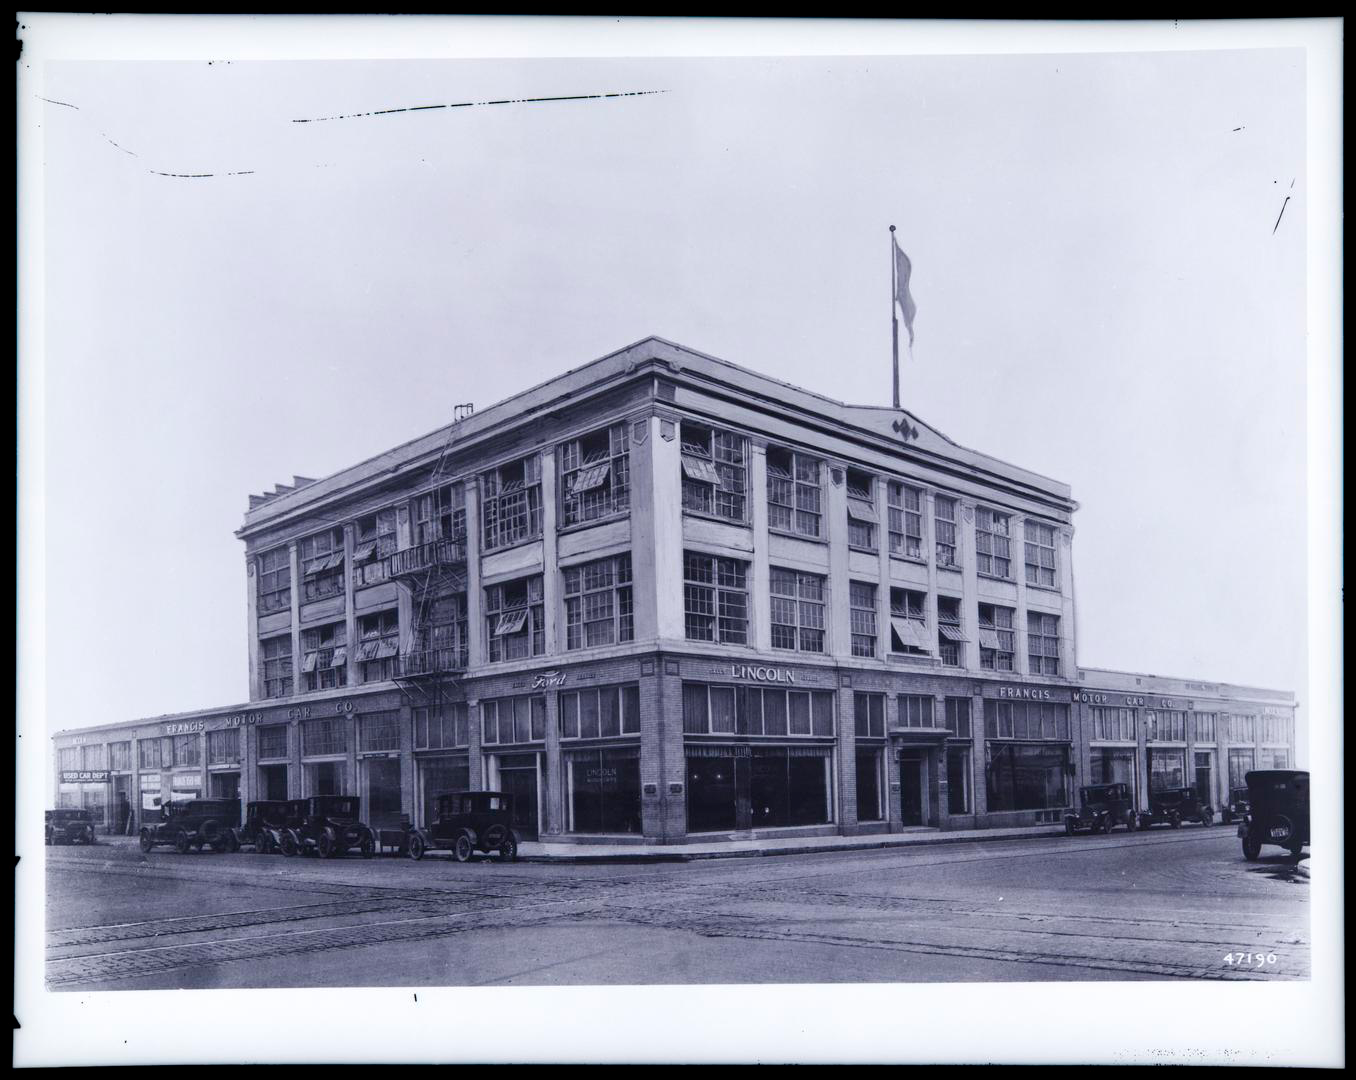 Francis Motor Car Co. / Multnomah County Building, Portland